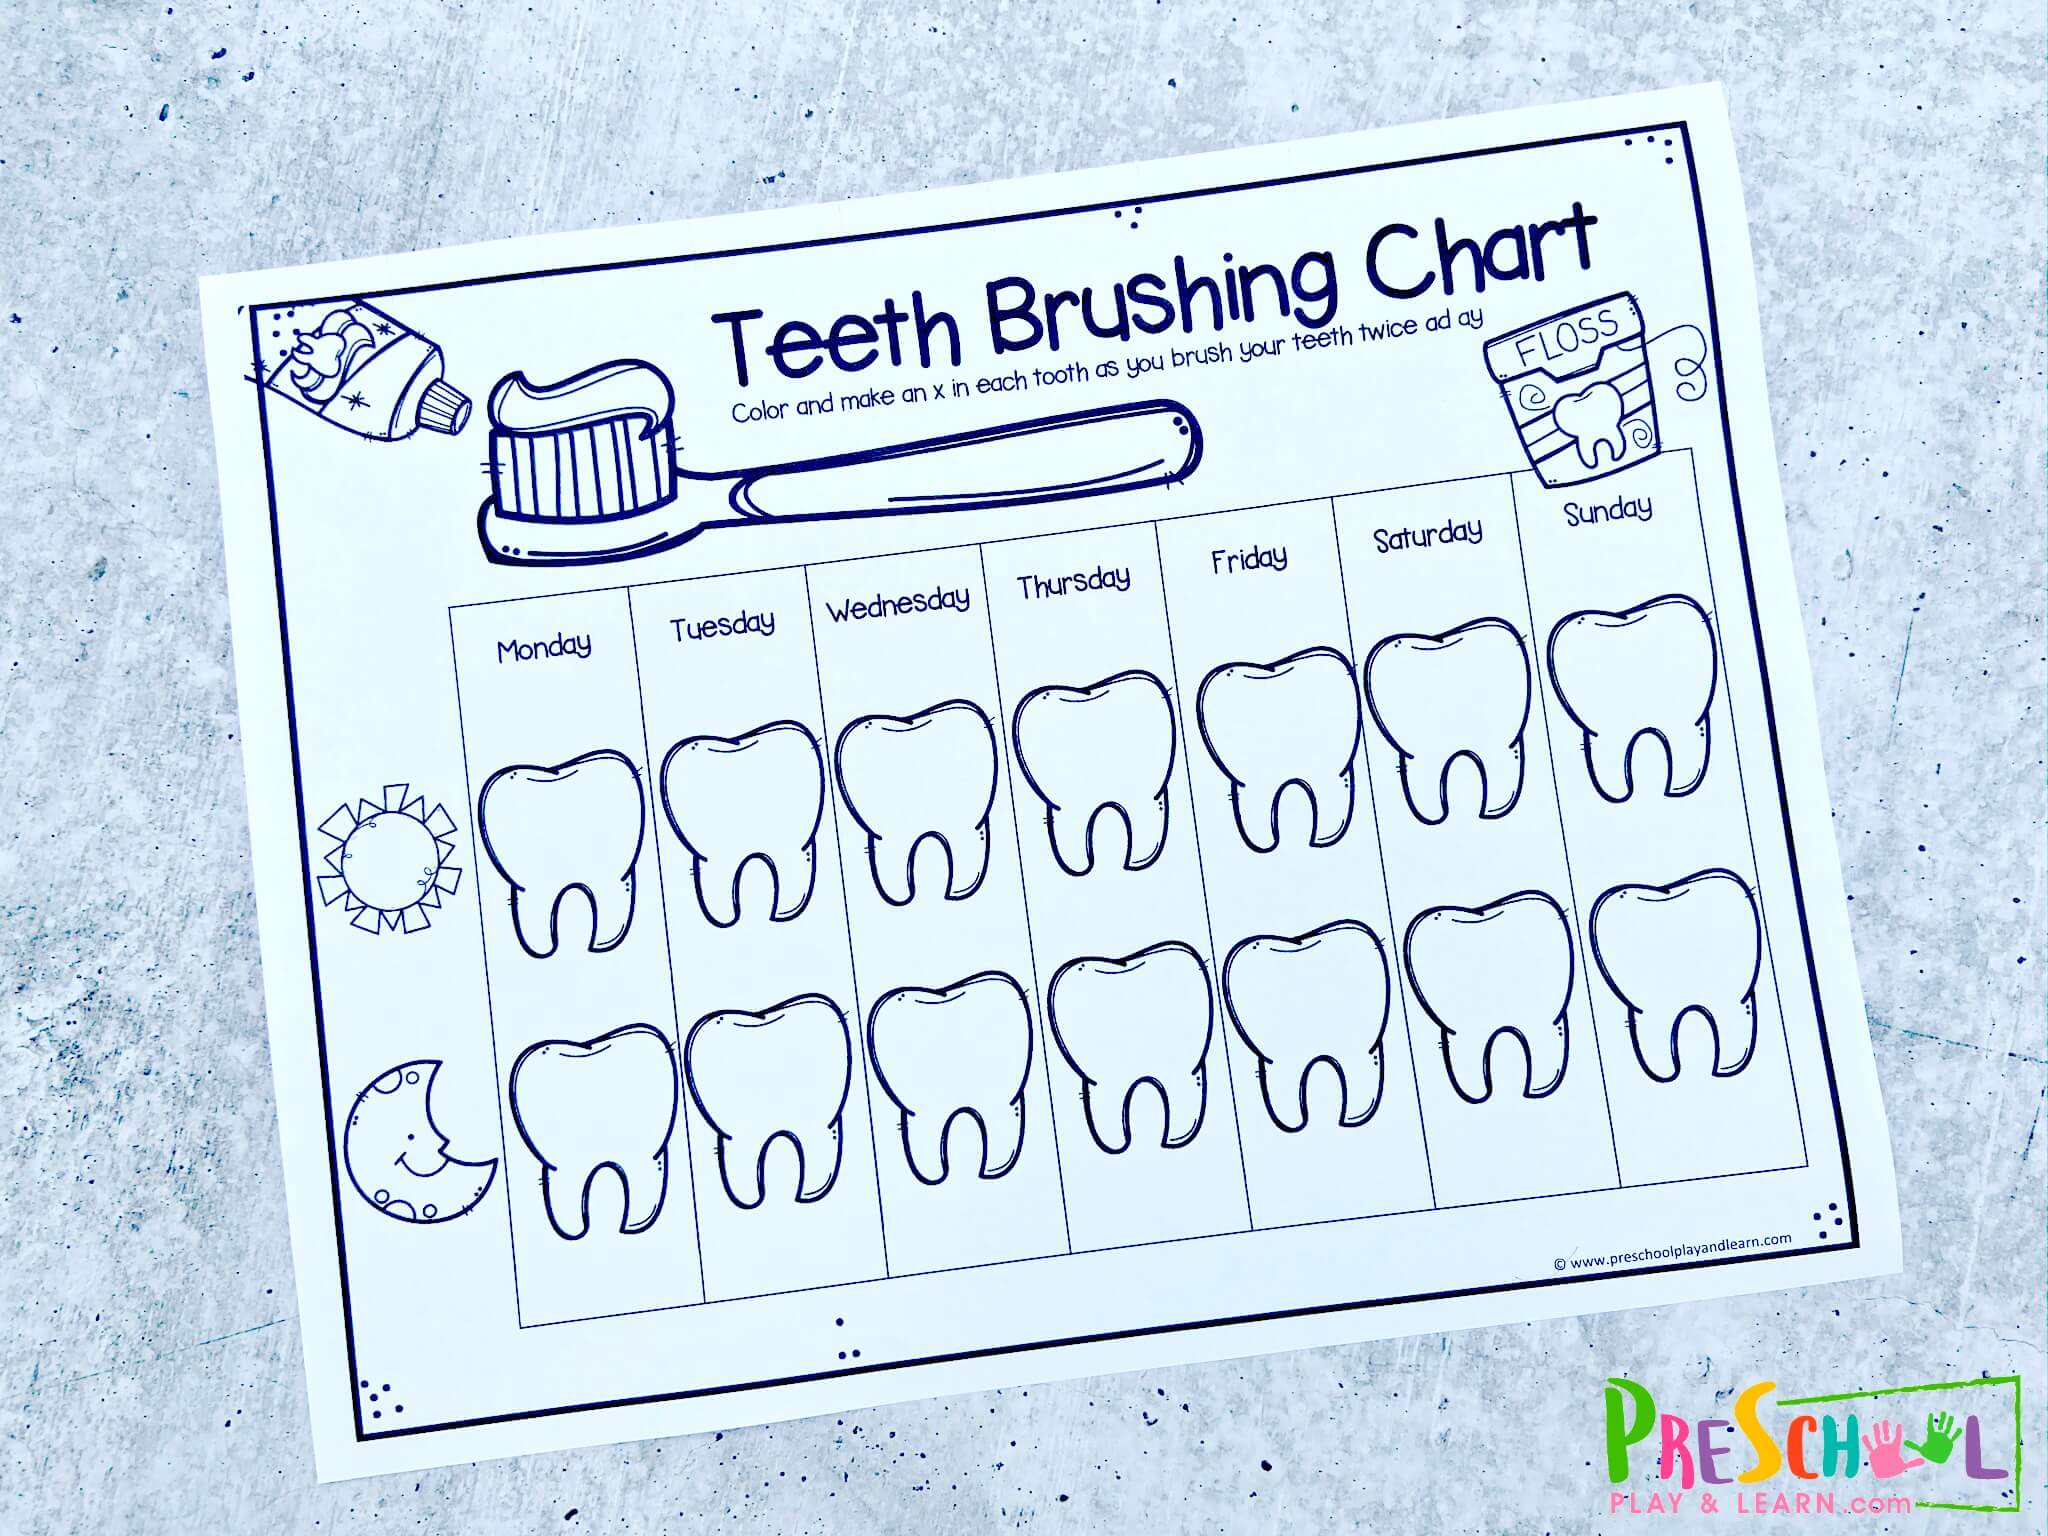 Teeth Brushing Chart Weekly Kids Reward Chart Printable I can brush my teeth 